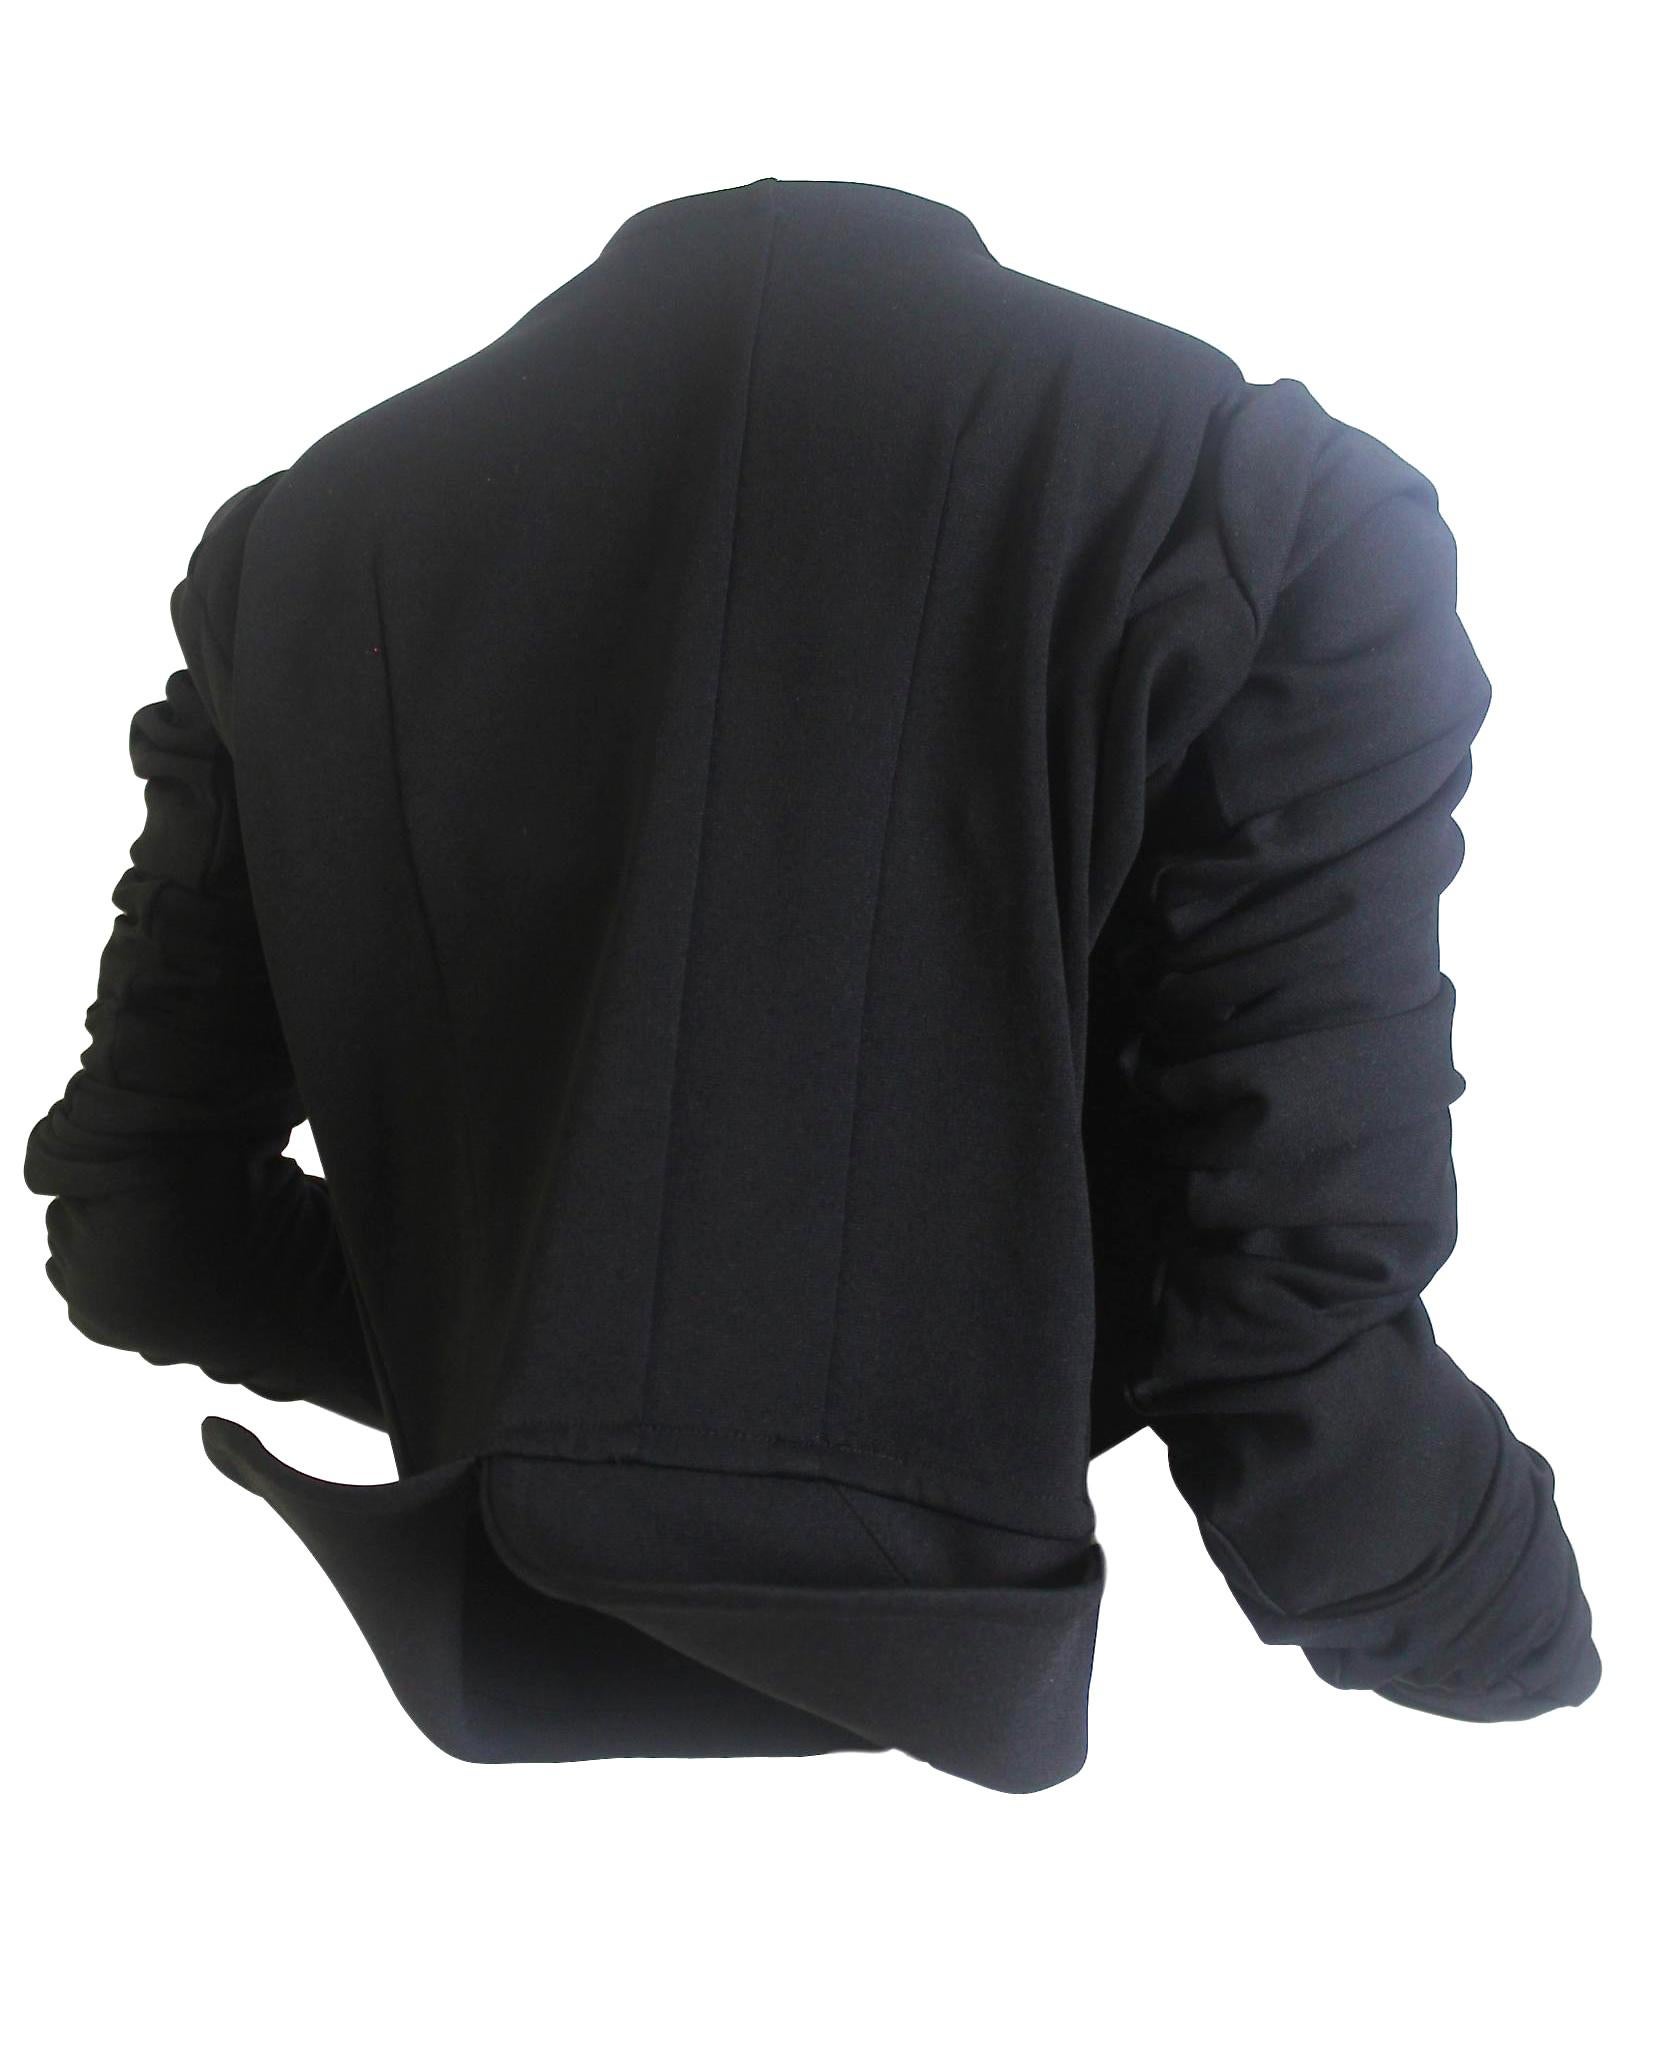 Comme des Garcons AD 2004 Spiral Sleeve Bustier Jacket For Sale 11